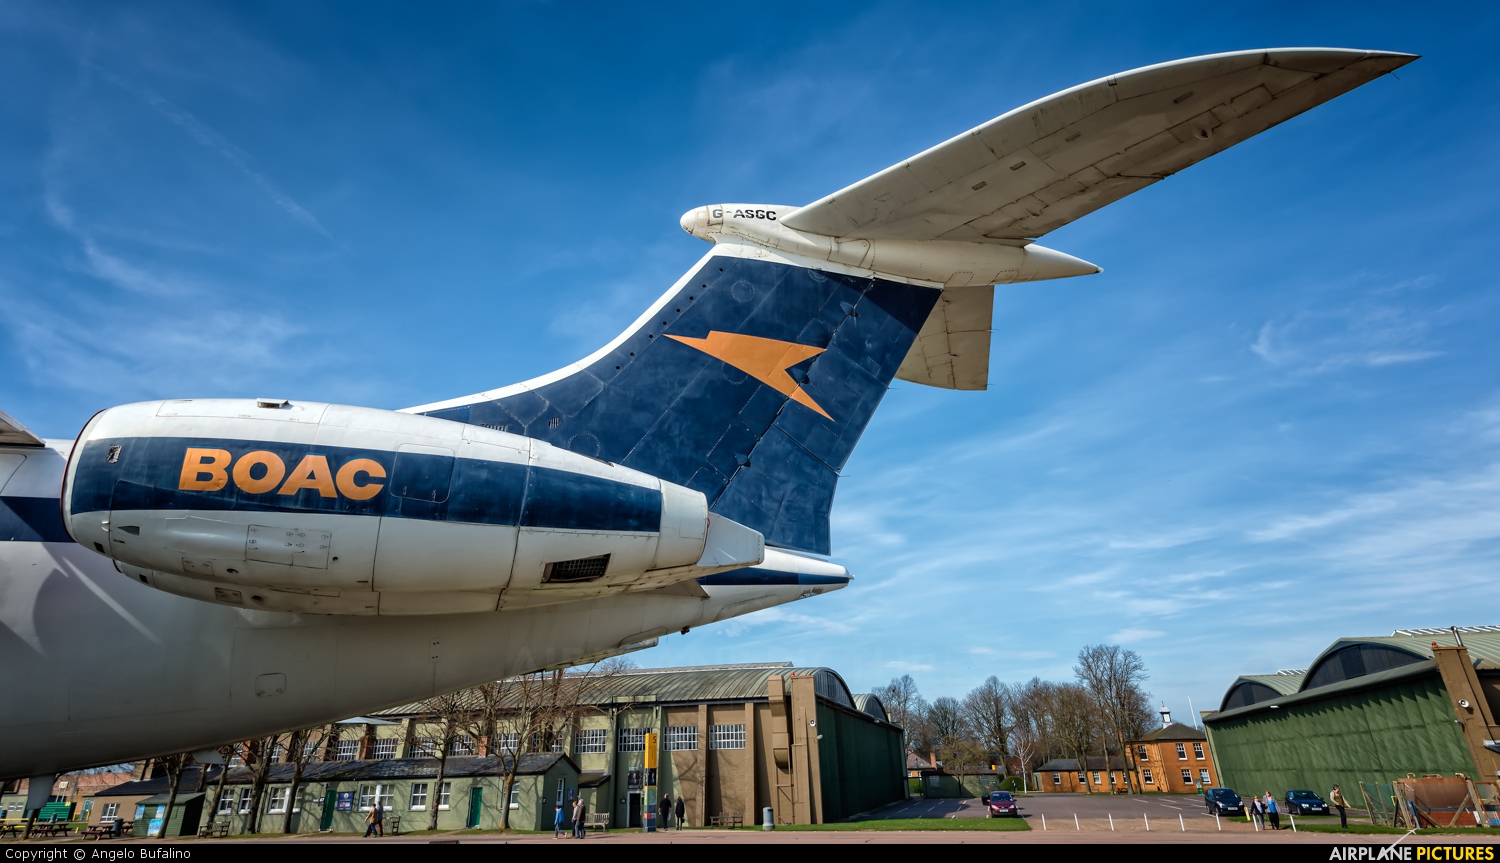 BOAC - British Overseas Airways Corporation G-ASGC aircraft at Duxford